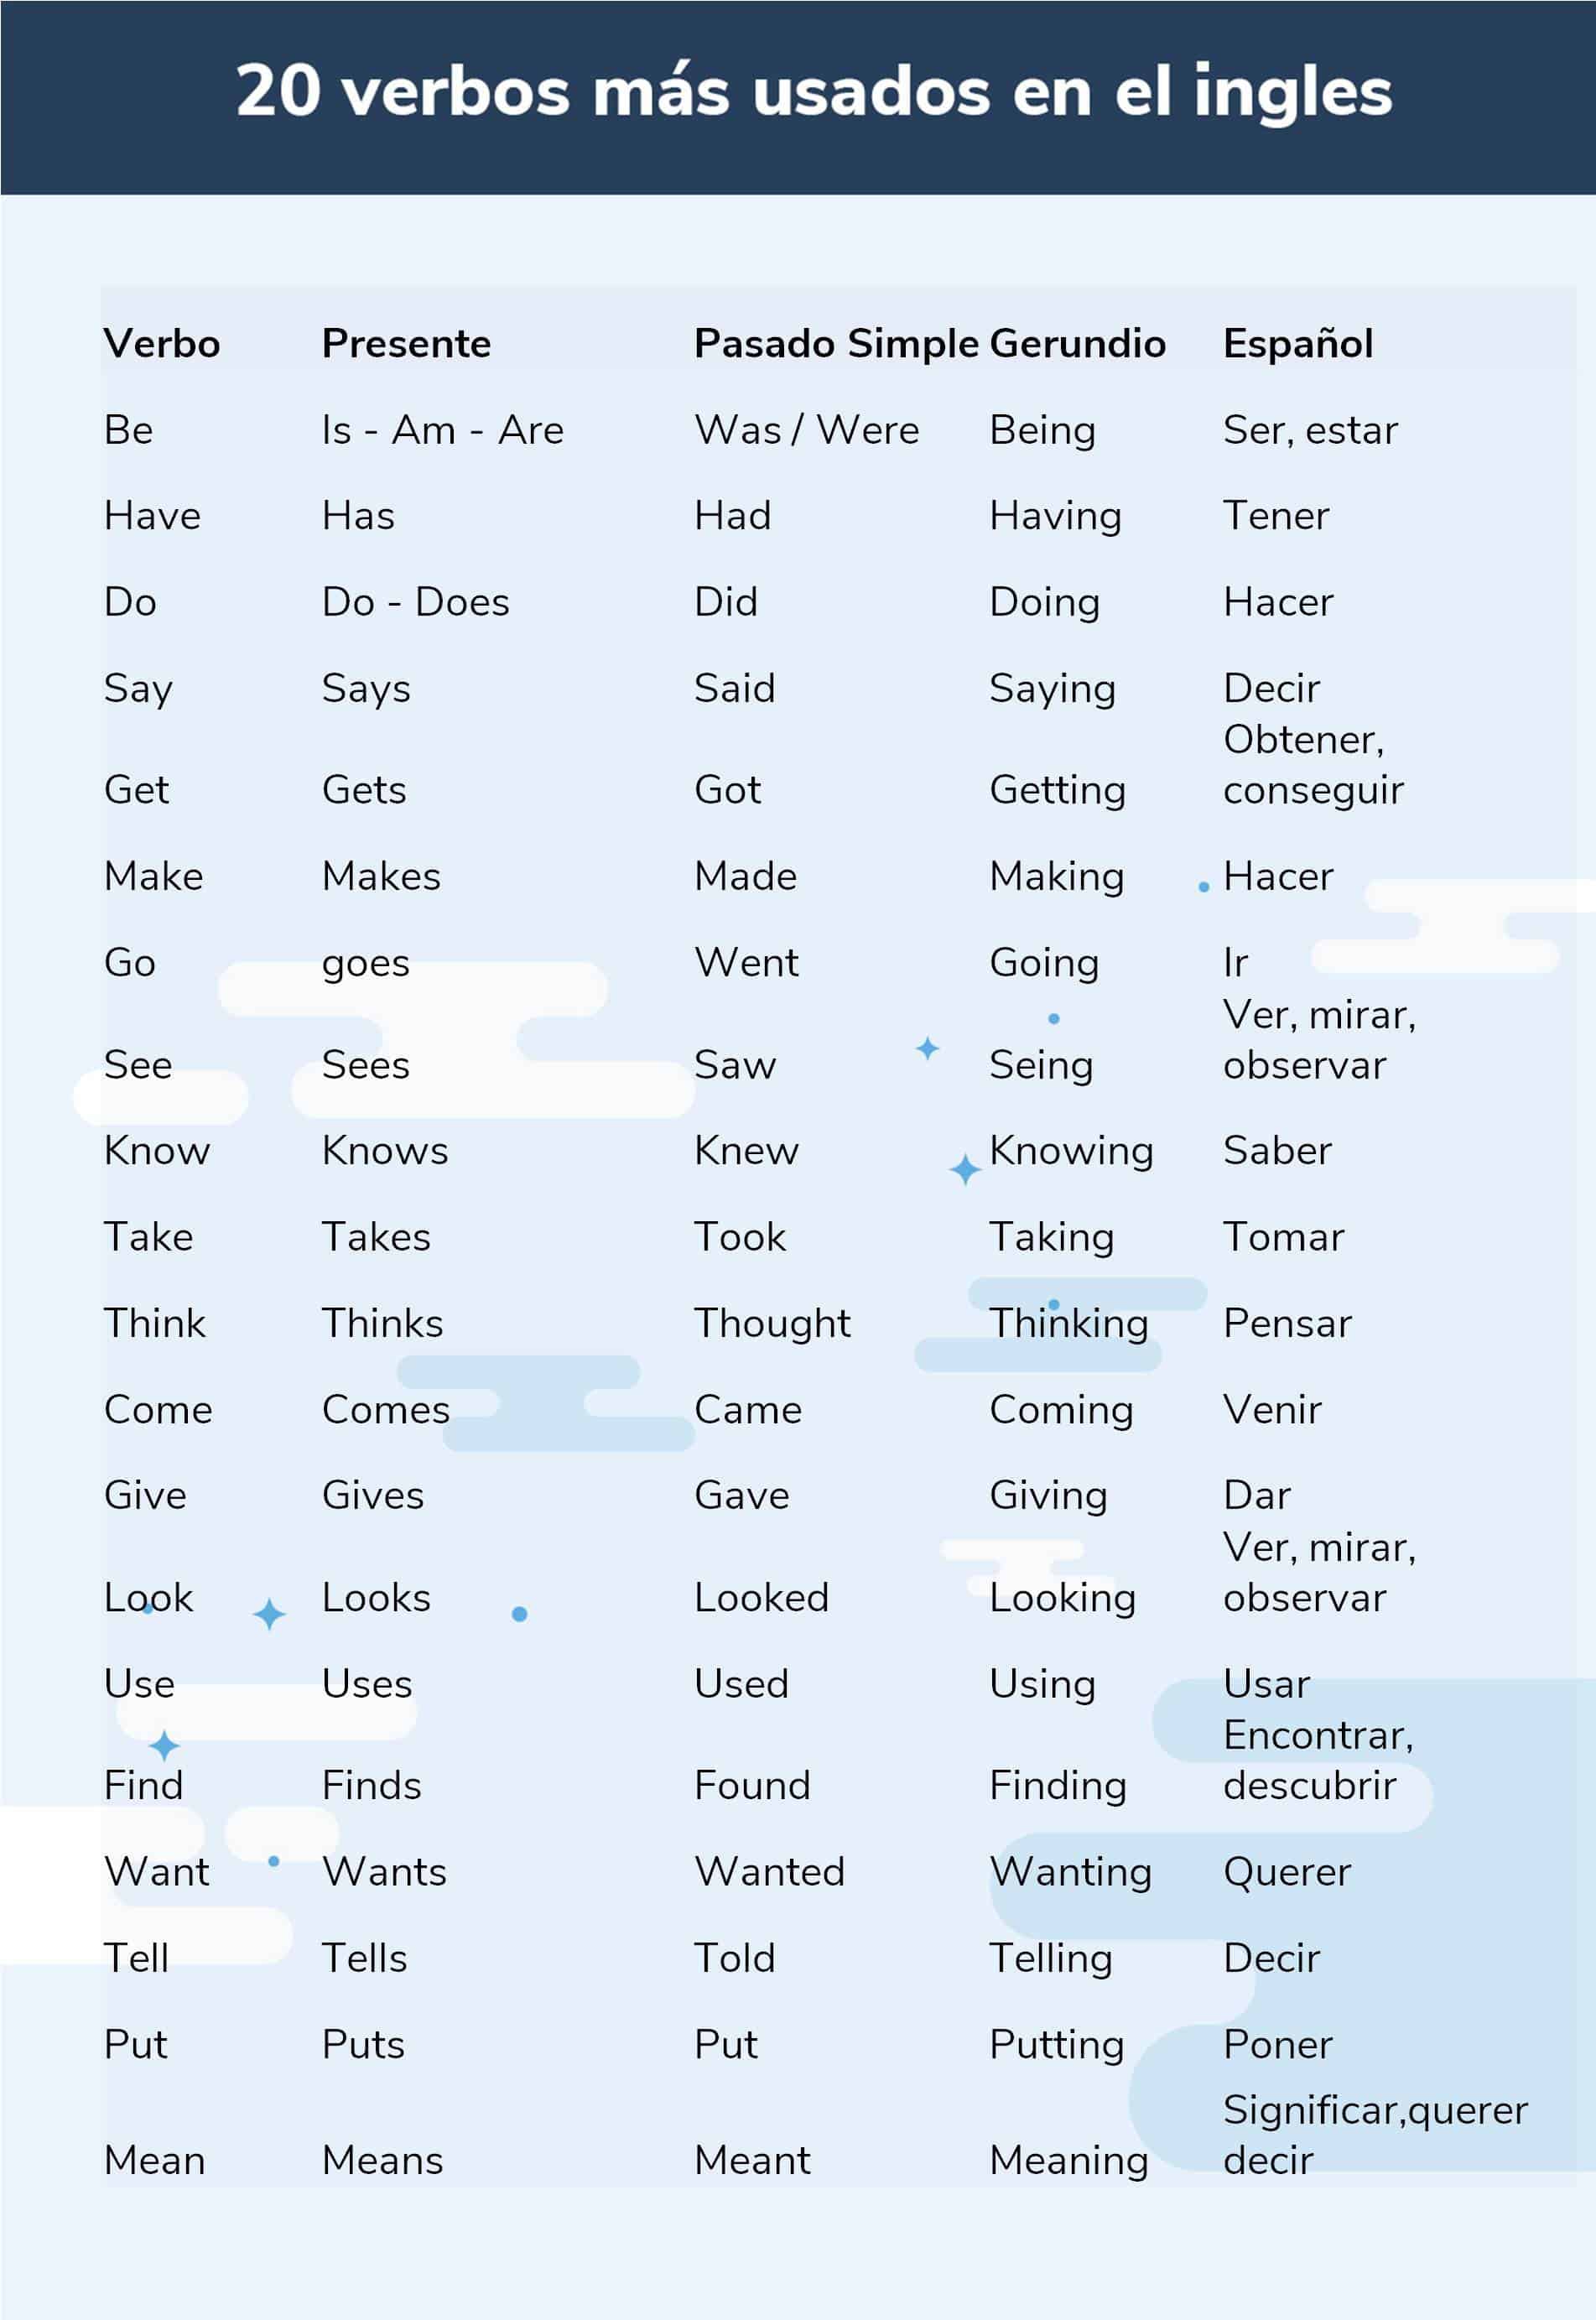 20 verbi in inglese più usato